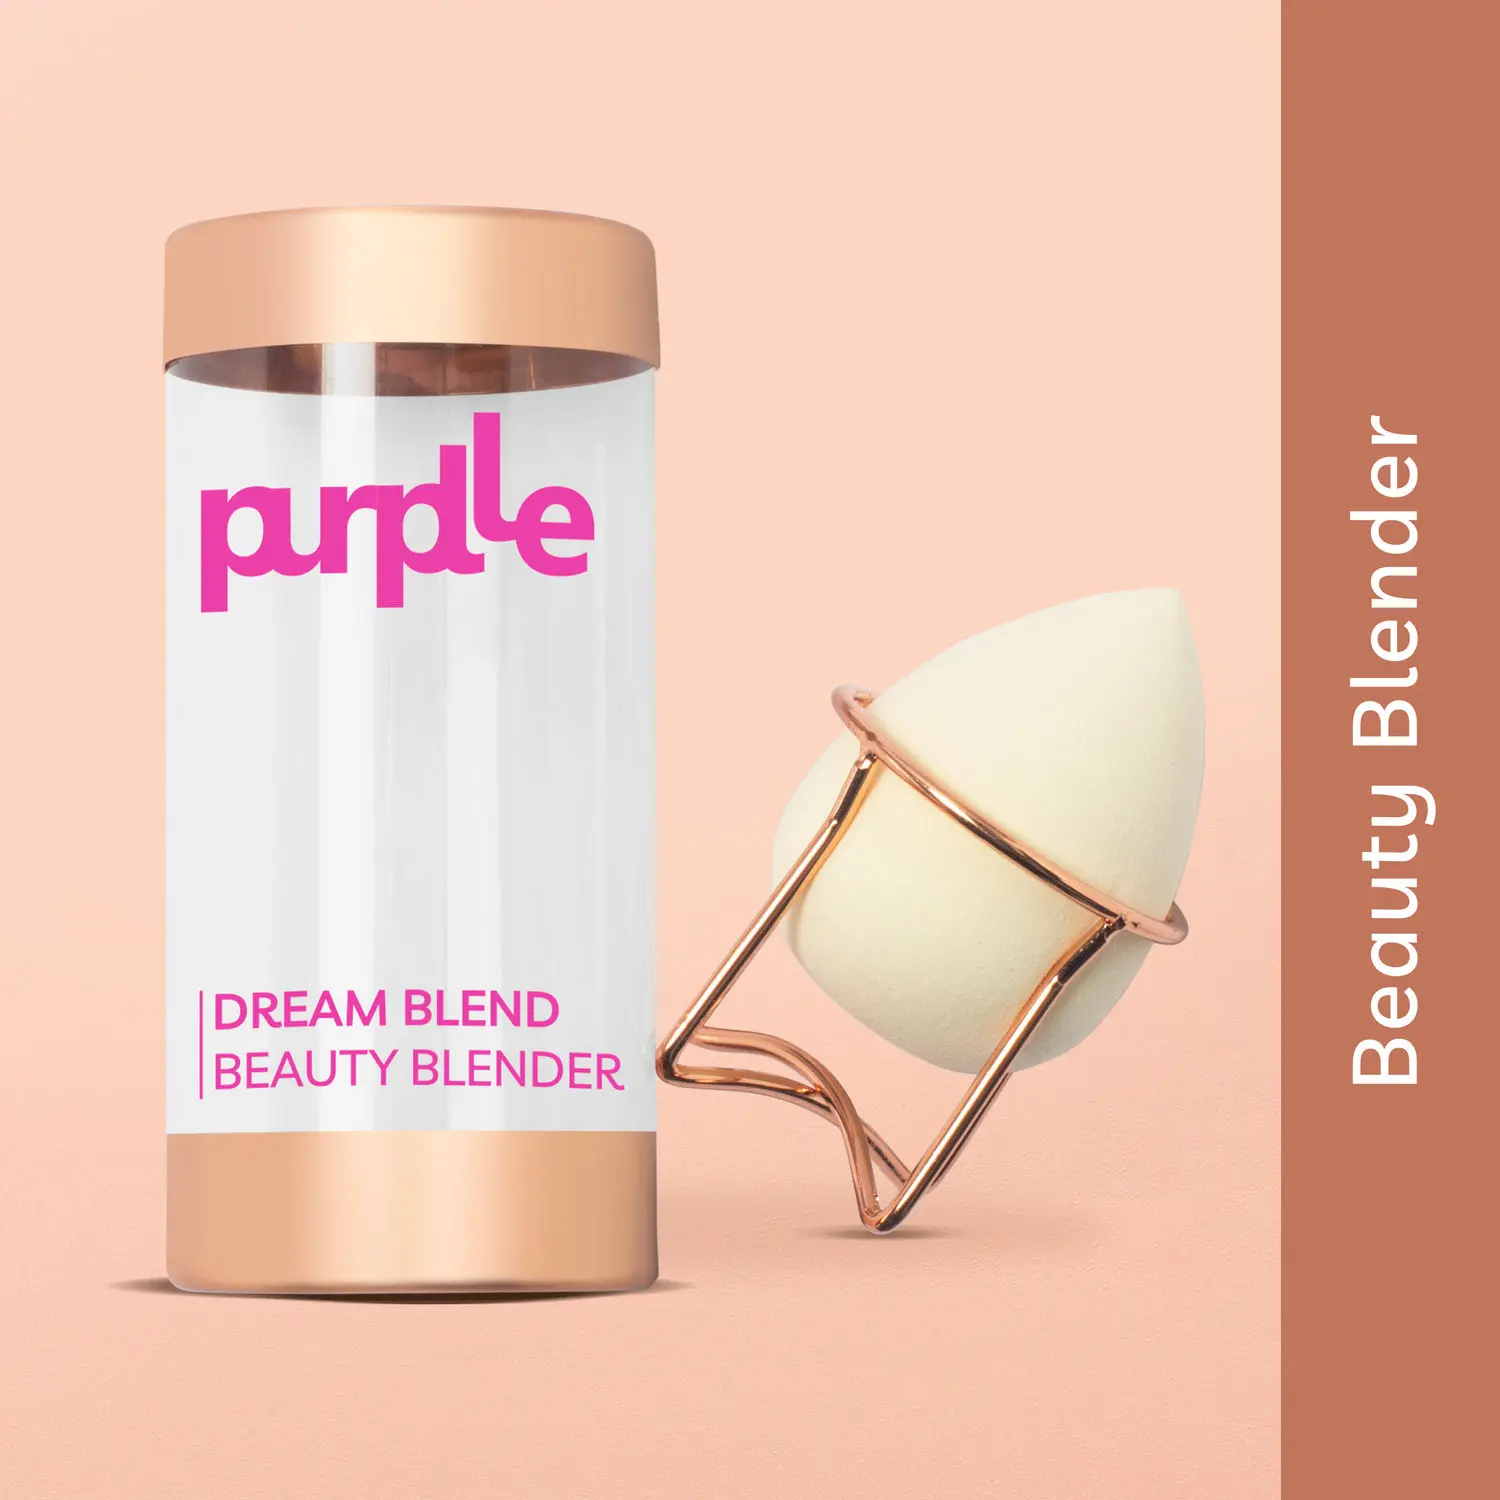 Purplle Dream Blend Beauty Blender - Cream